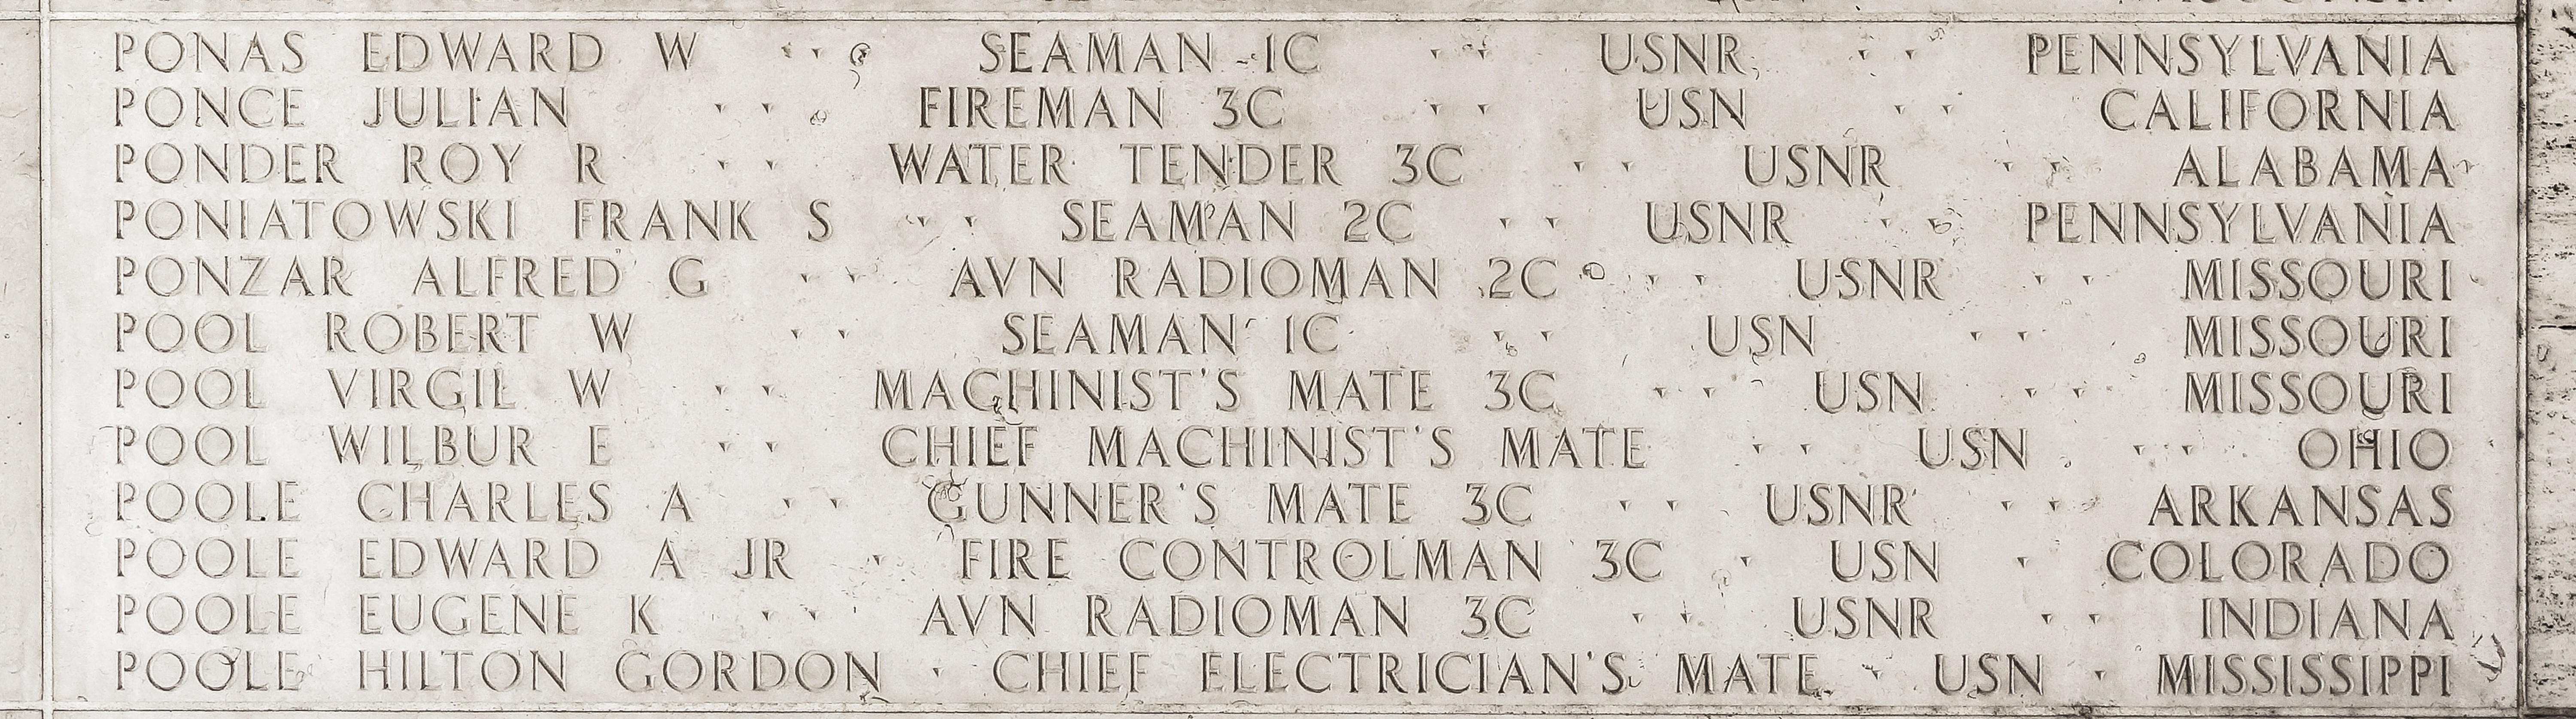 Edward A. Poole, Fire Controlman Third Class